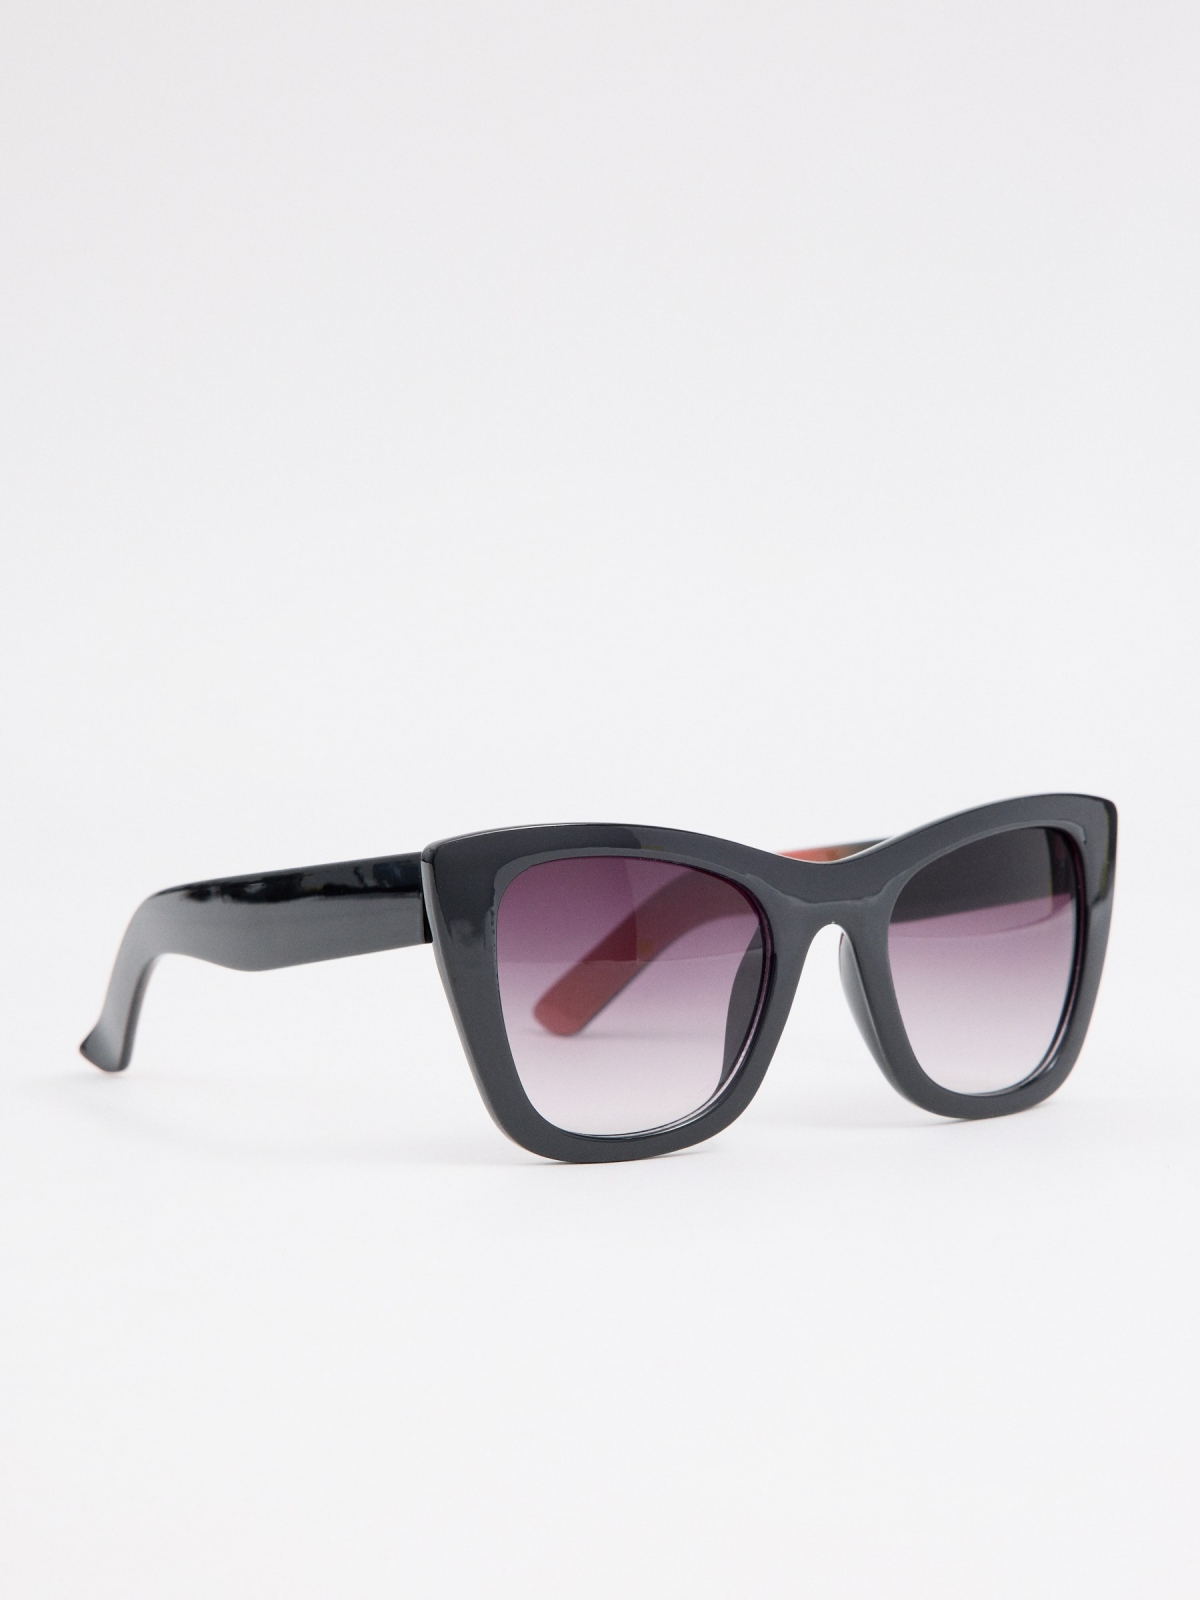 Square cat eye sunglasses black detail view